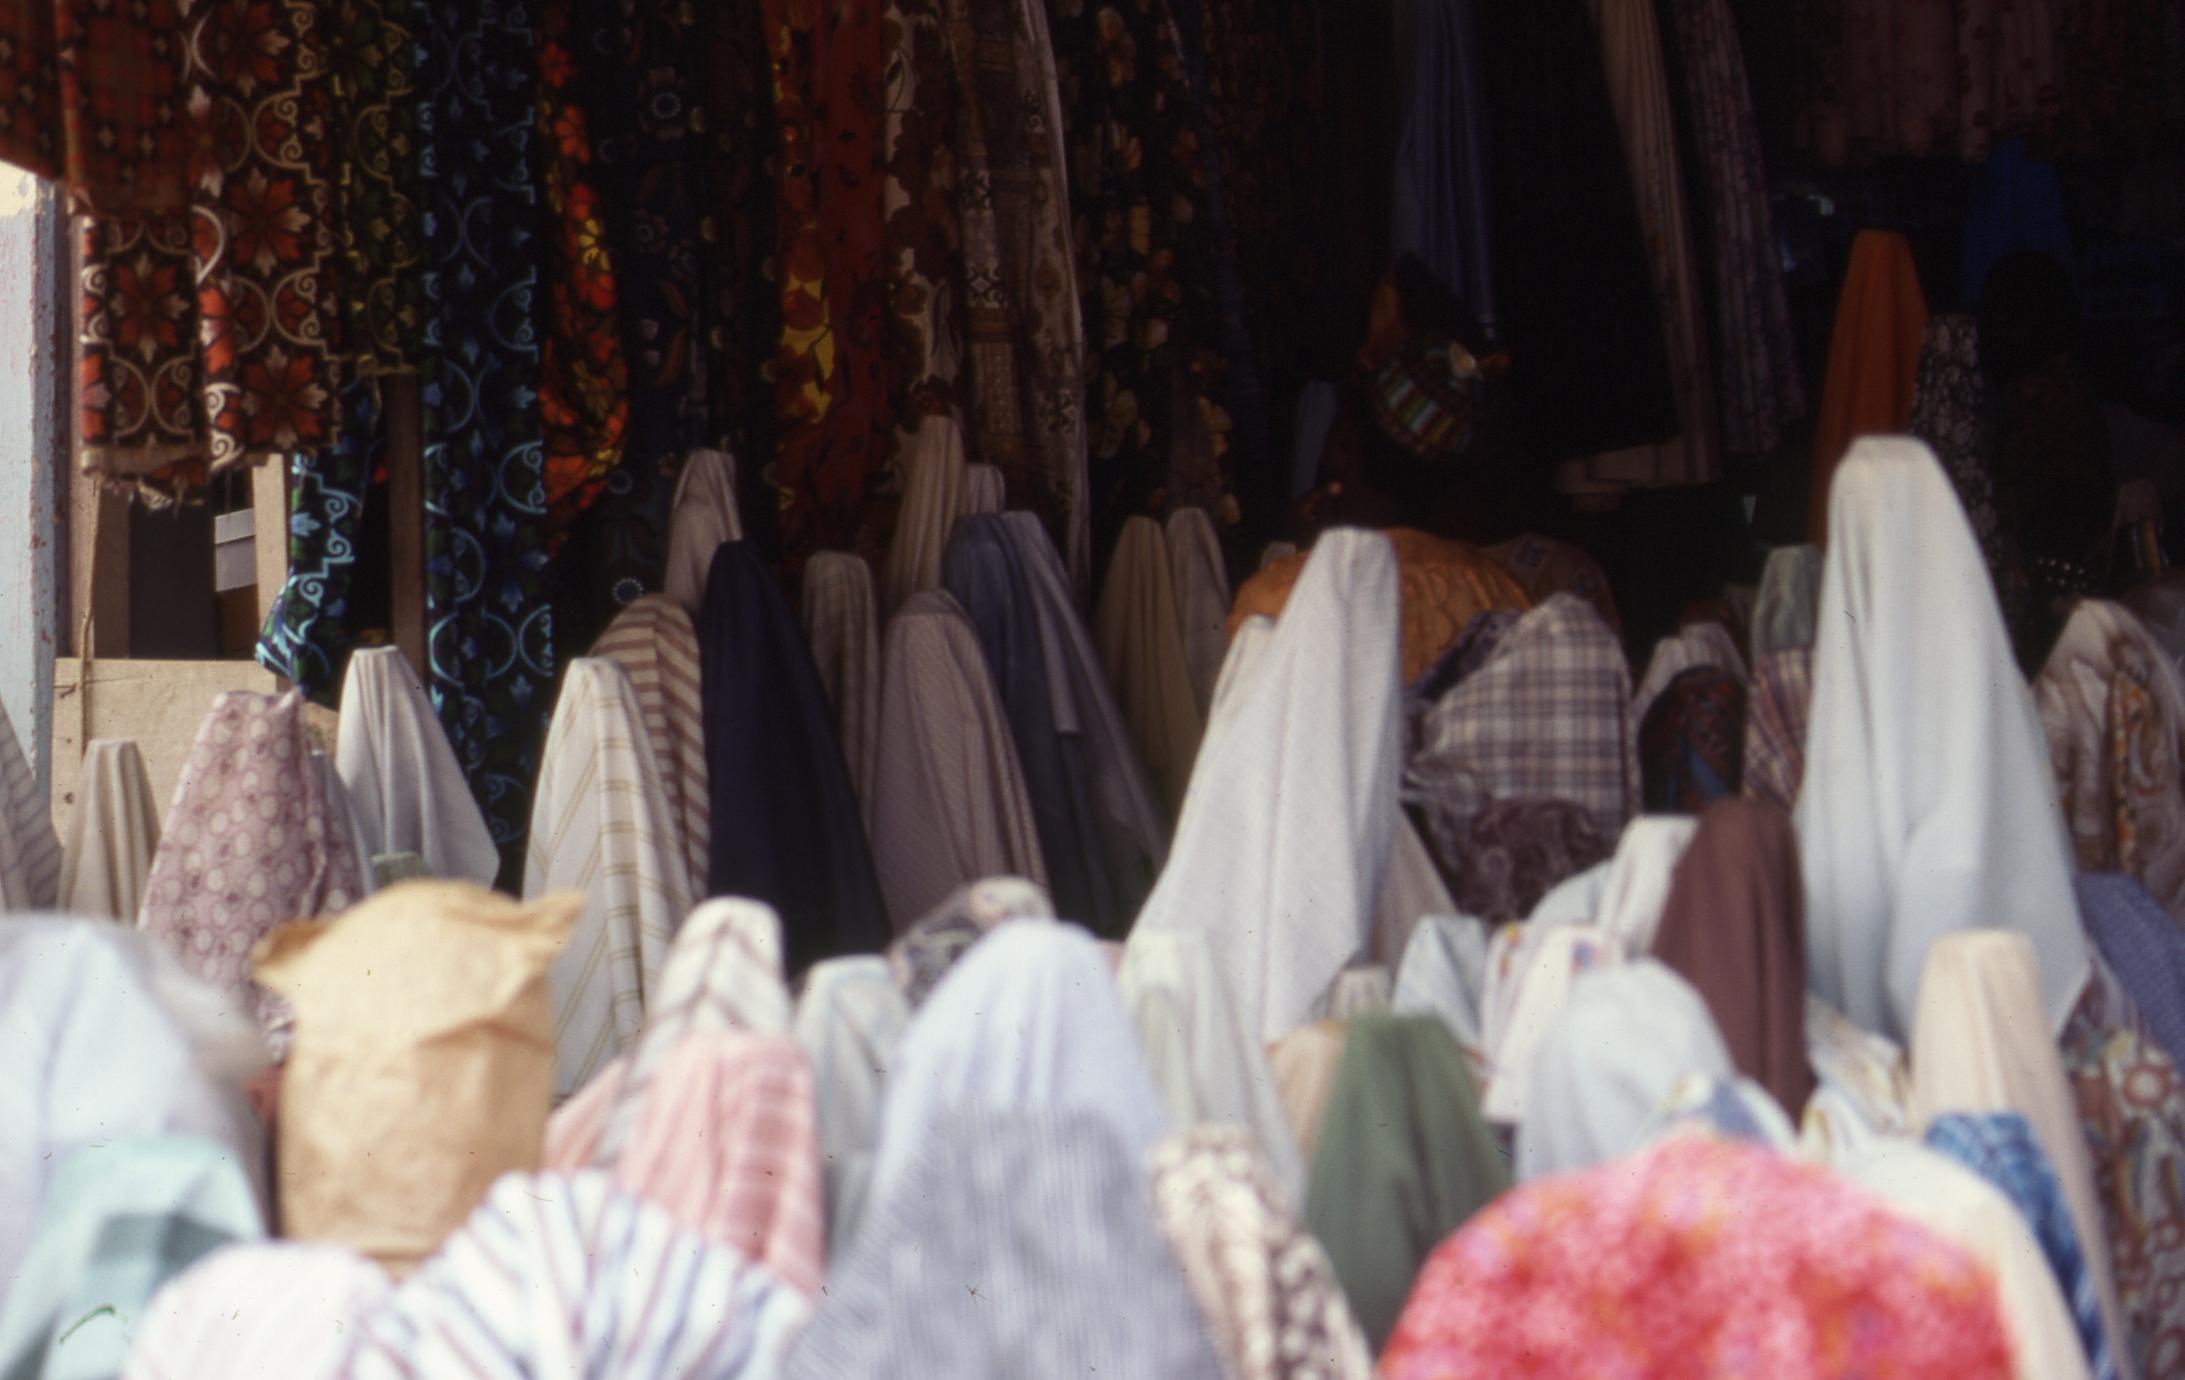 Cloth shop in Ibadan